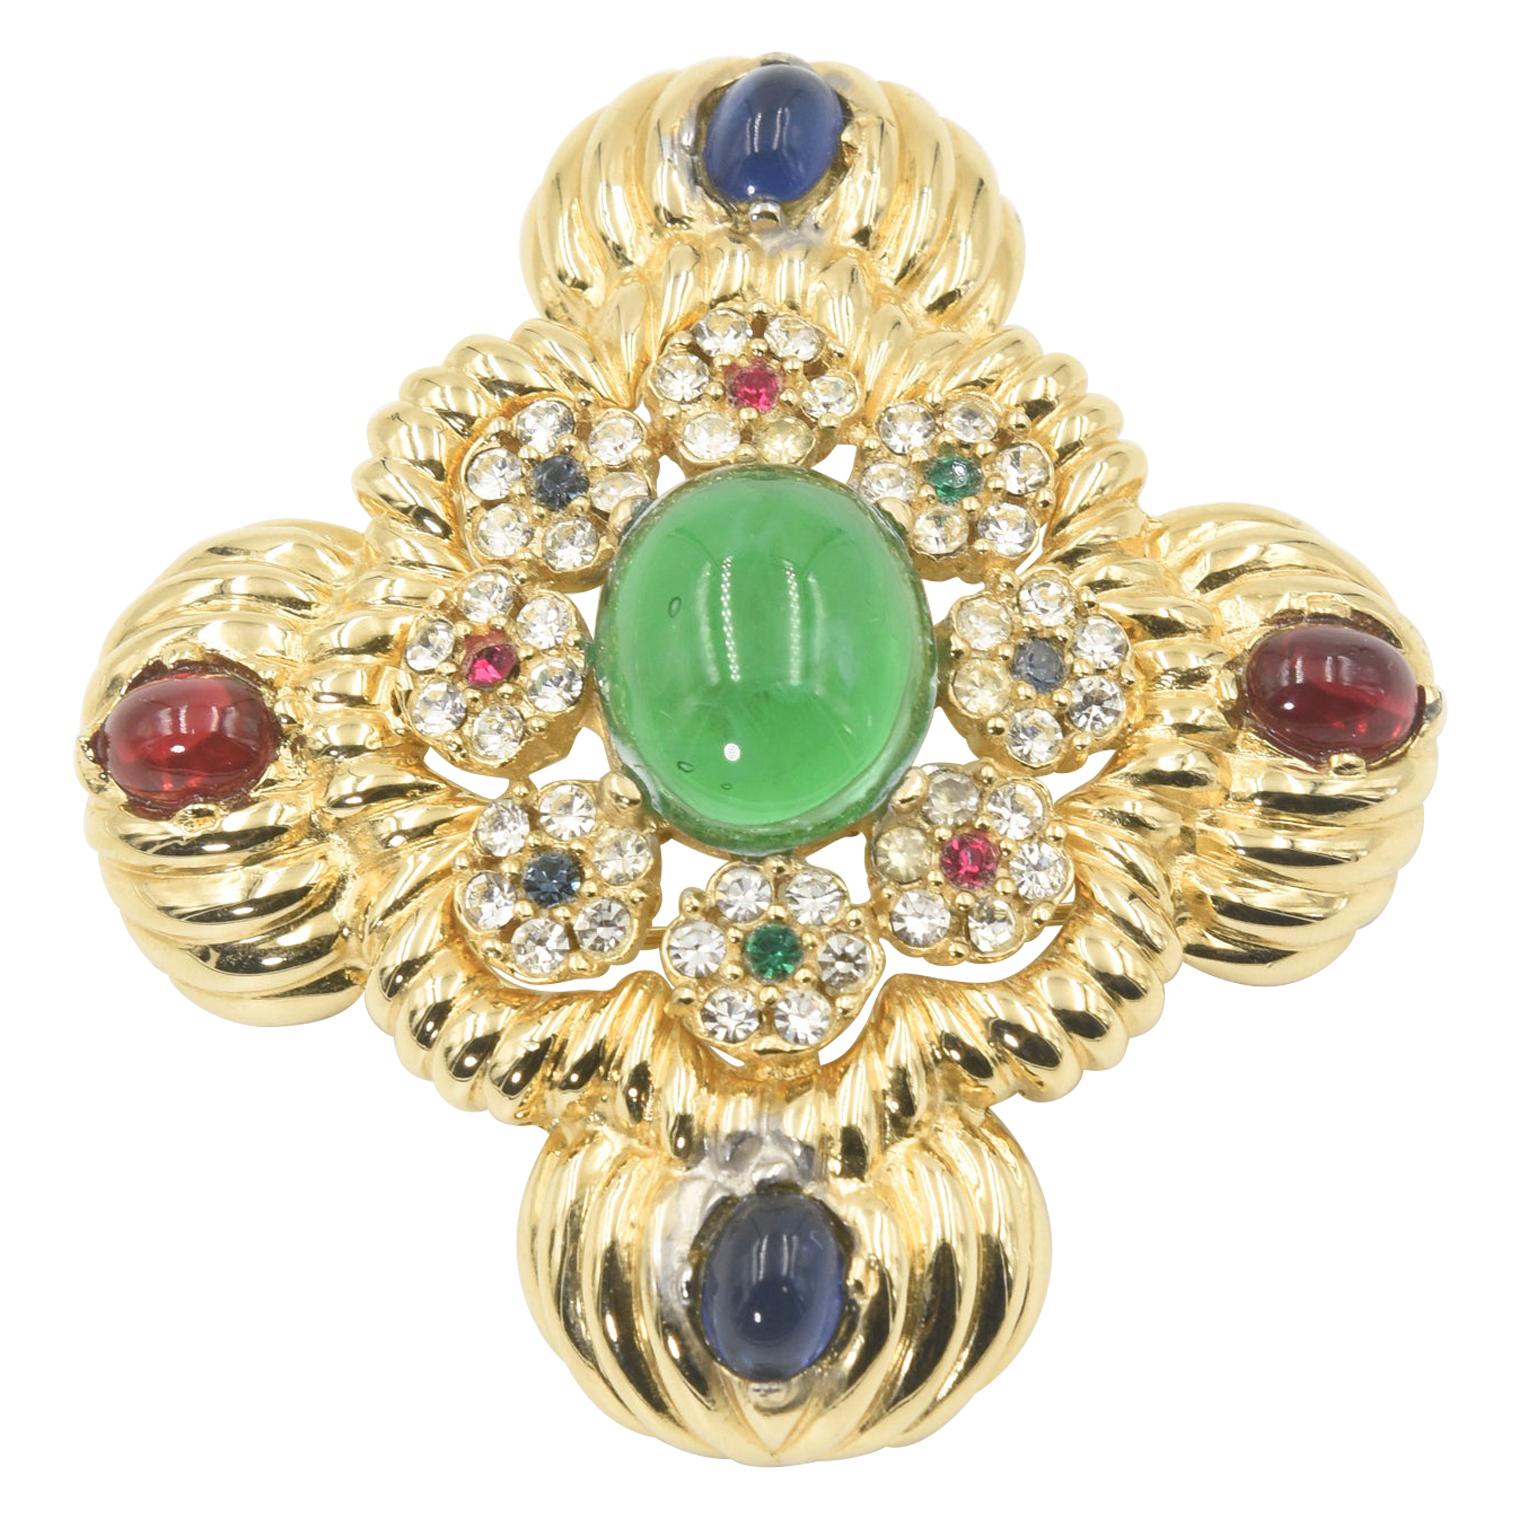 Ciner Jewels of India Moghul Maltese Cross Pendant Brooch